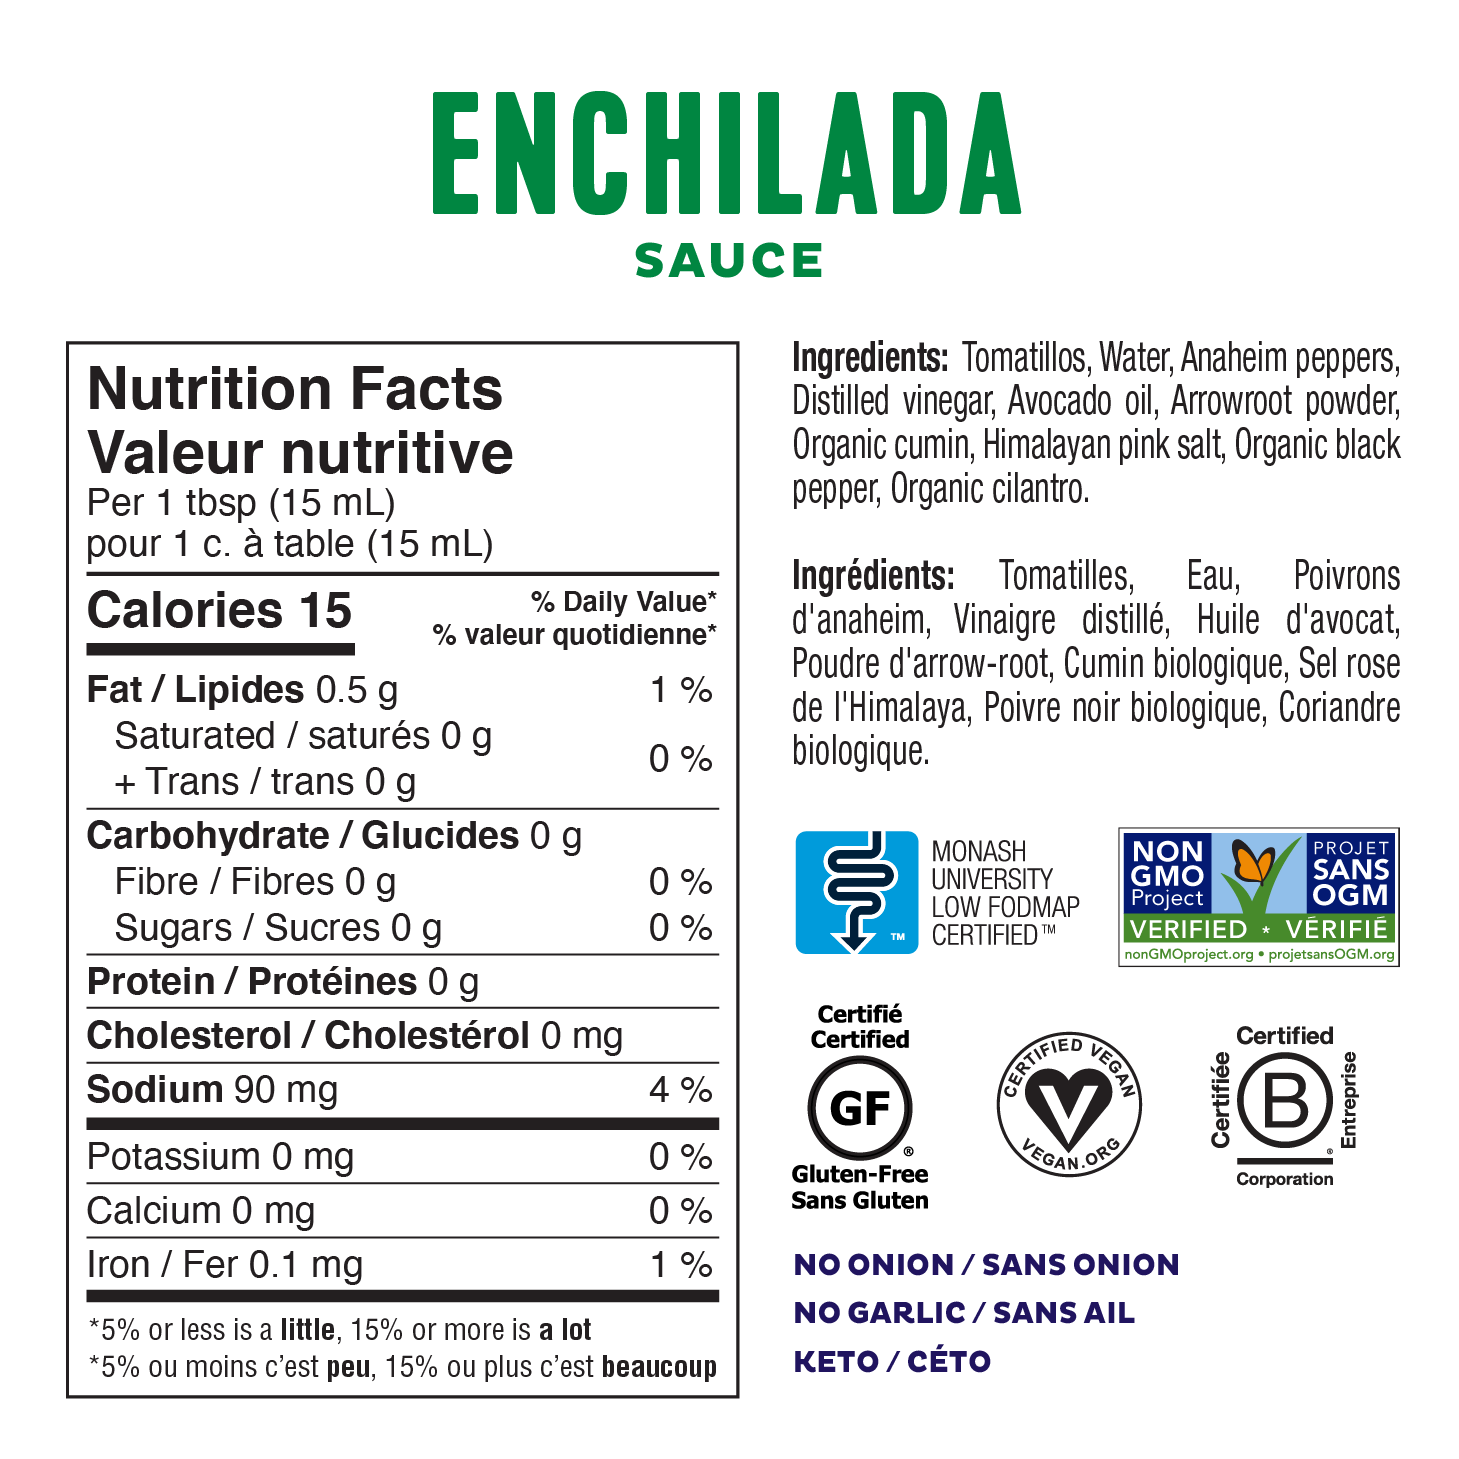 Fody Foods Sauce - Green Enchilada (236ml) - Lifestyle Markets